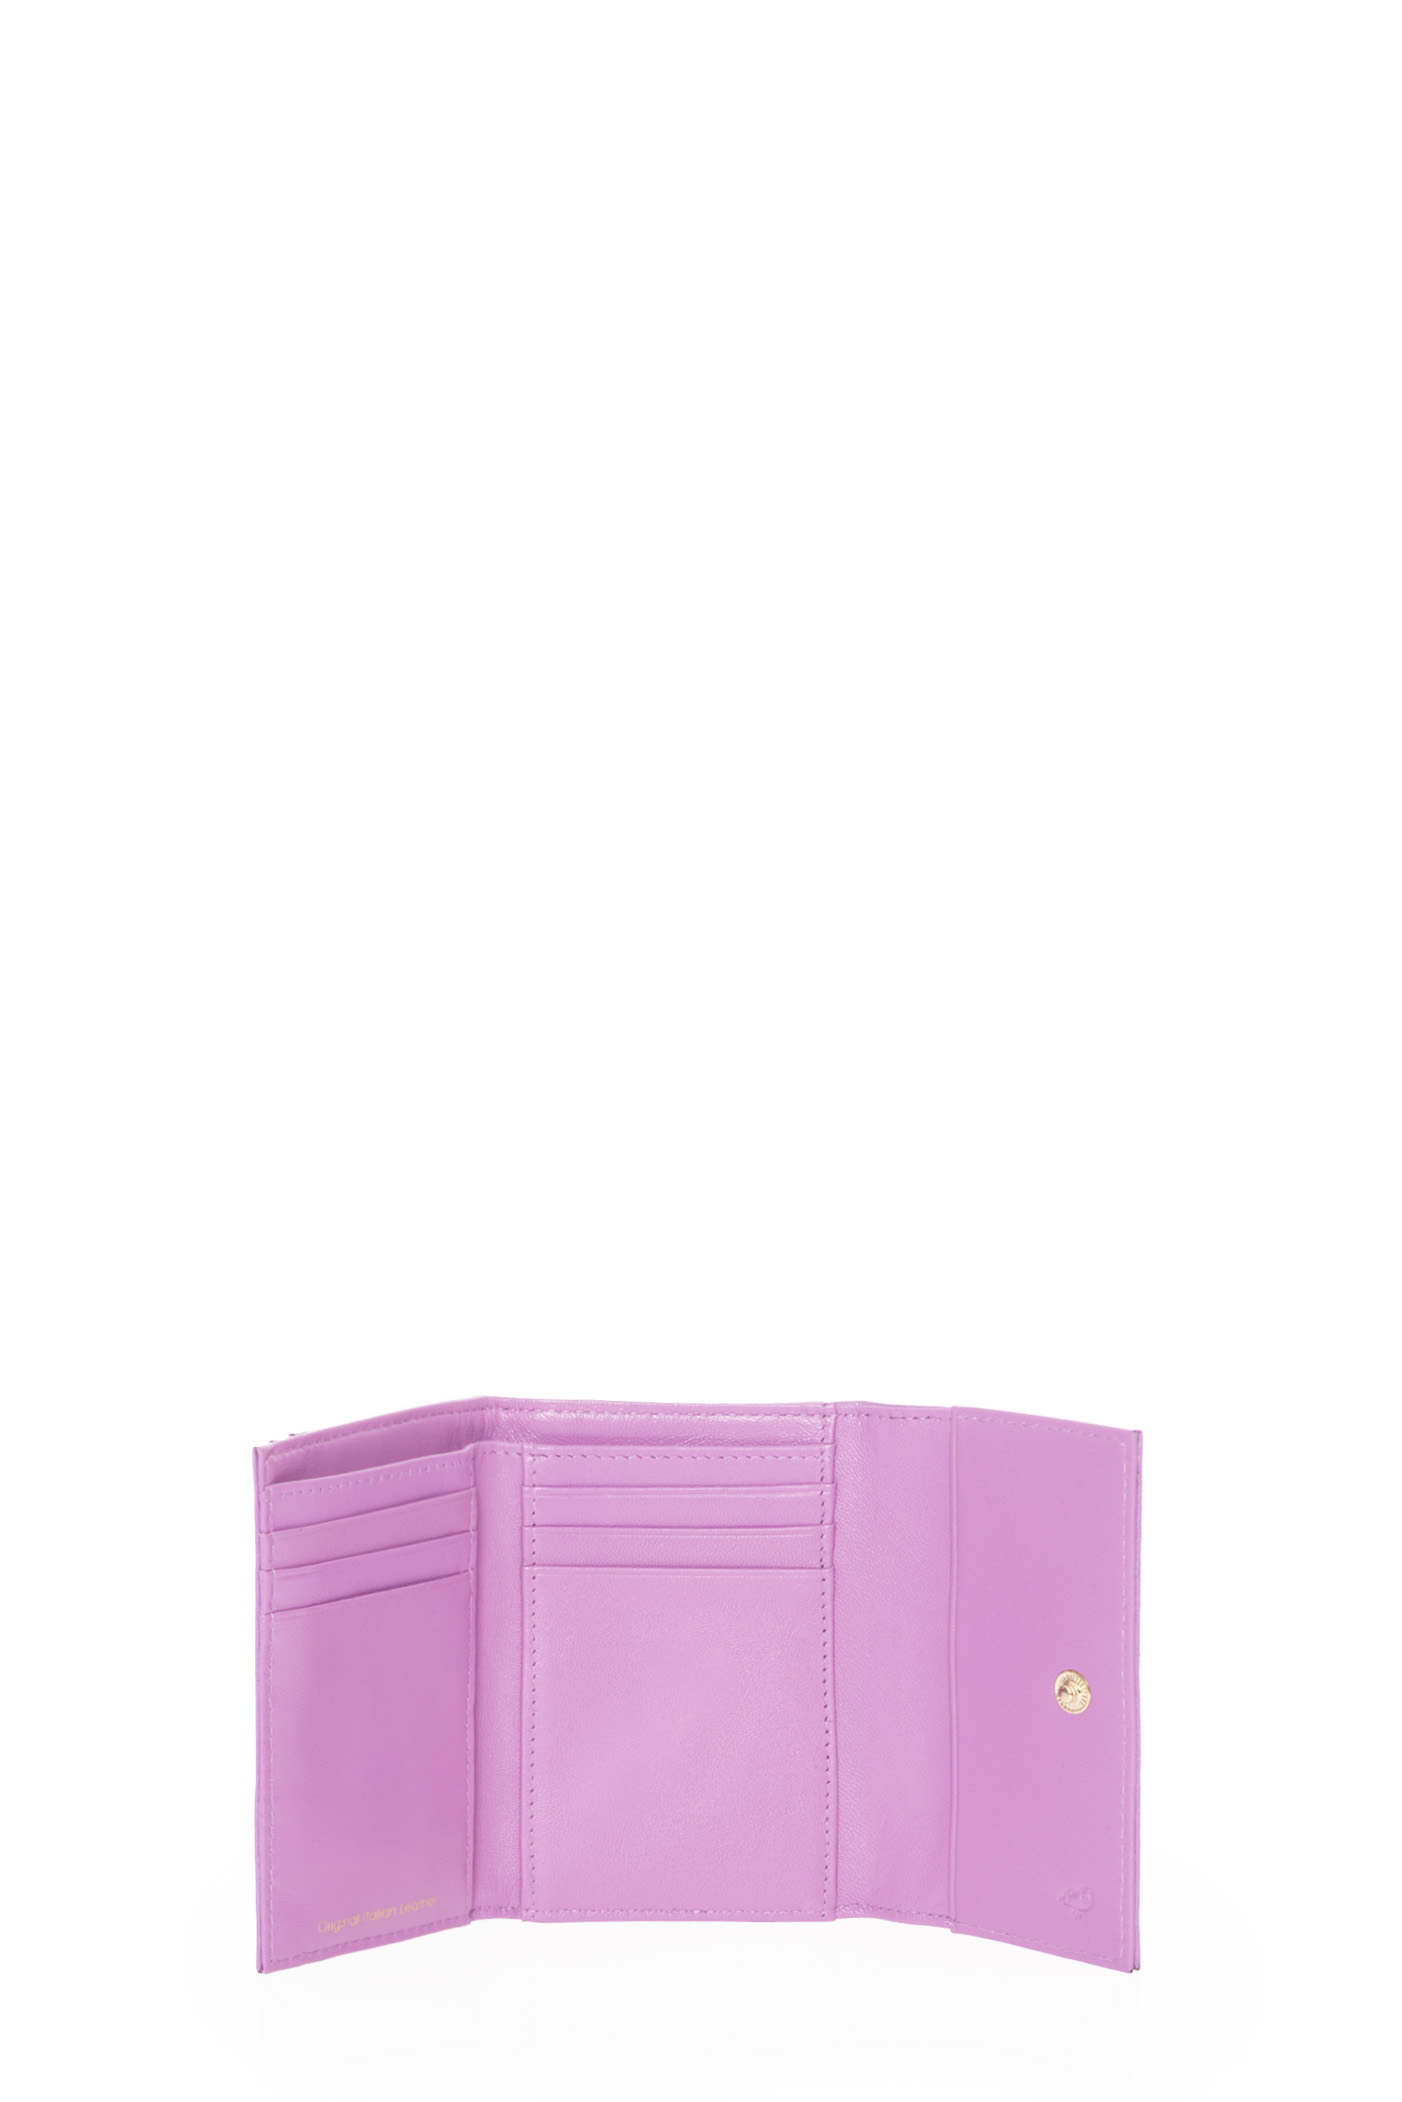 Louis Vuitton Leather Compact Wallet - Purple Wallets, Accessories